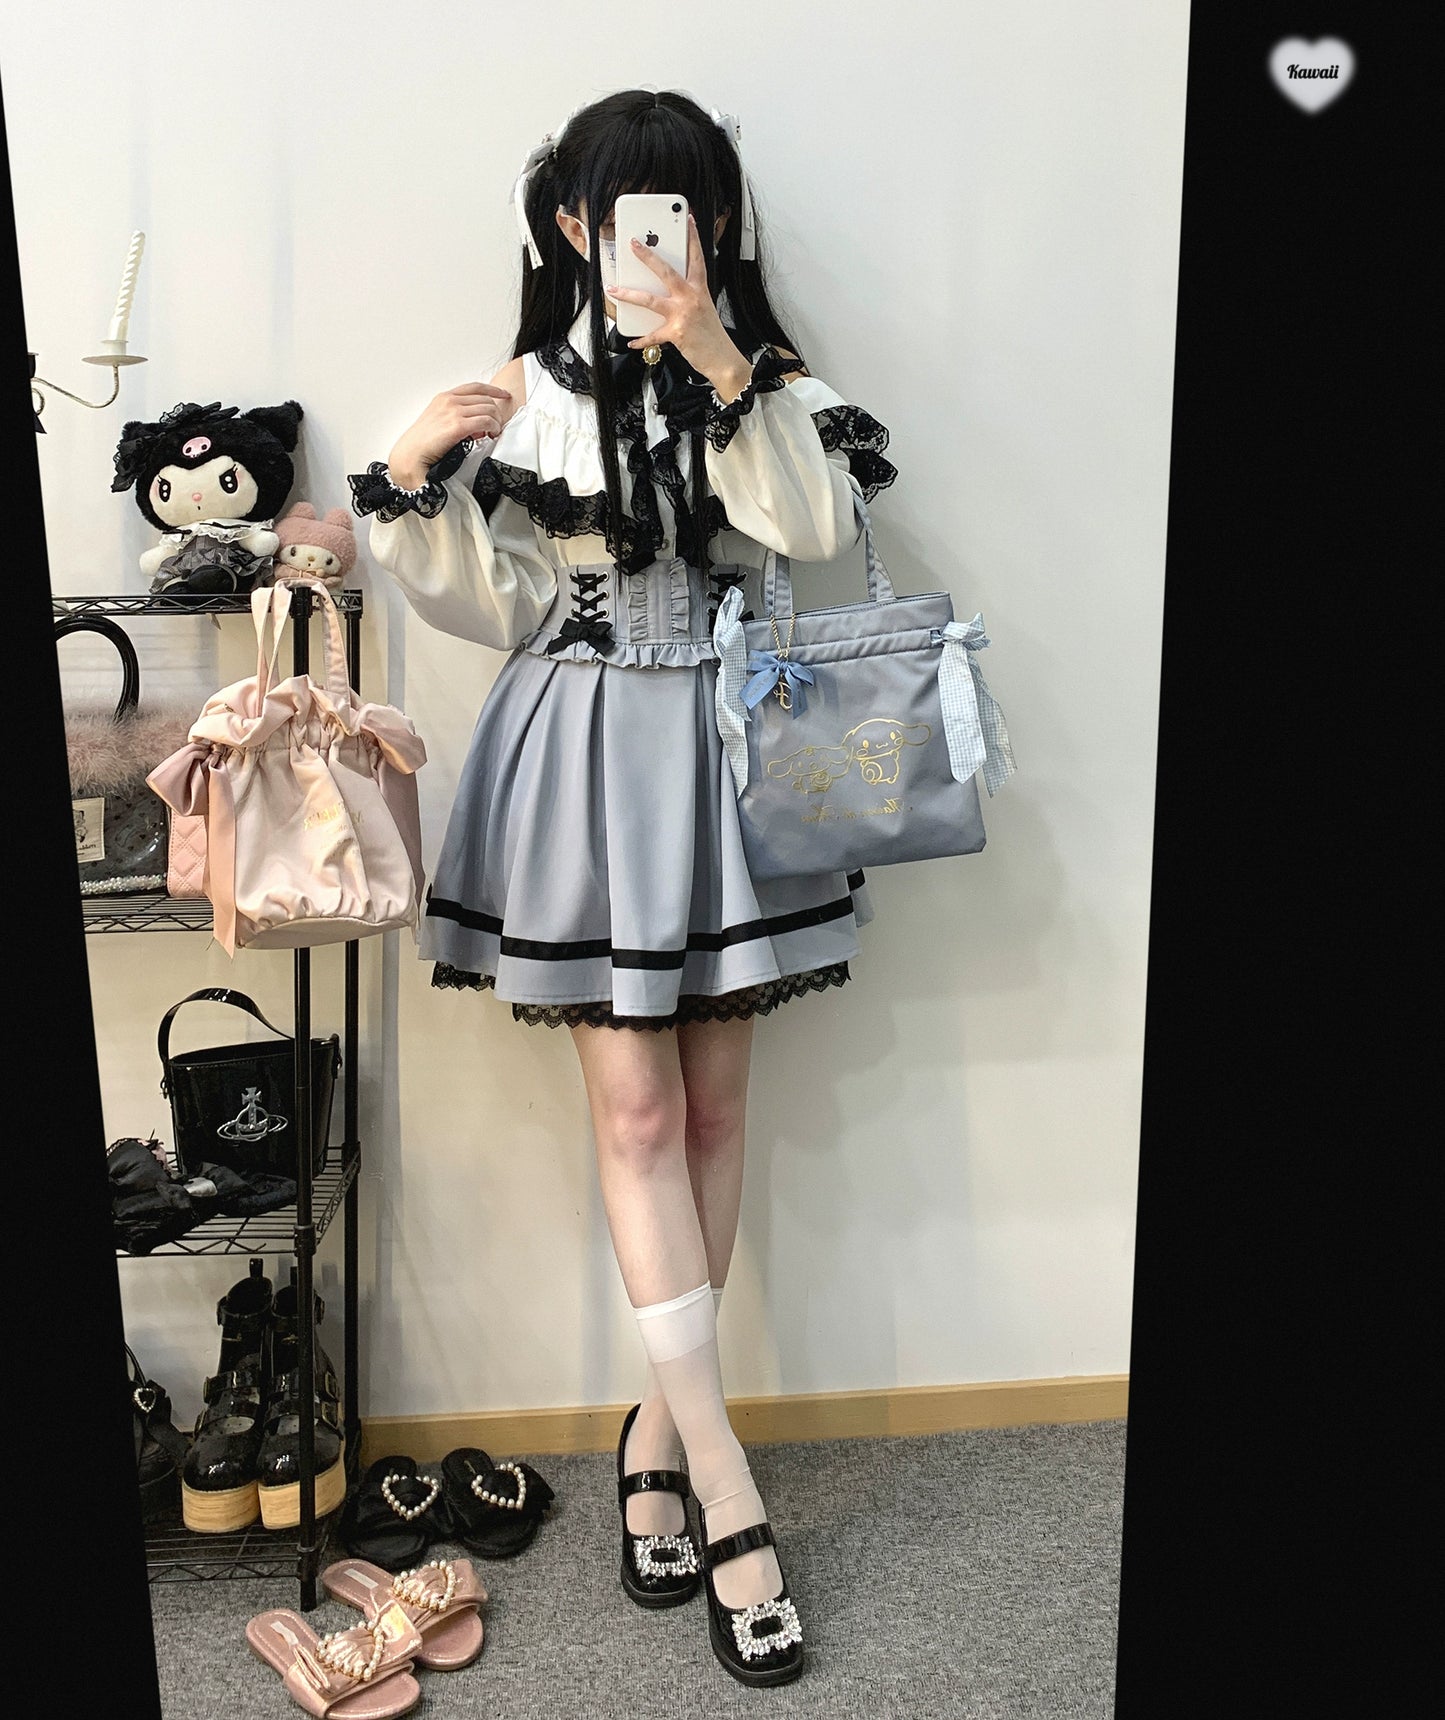 Jirai Kei Skirt High Waist Lace Up Skirt With Bow Tie 31860:396716